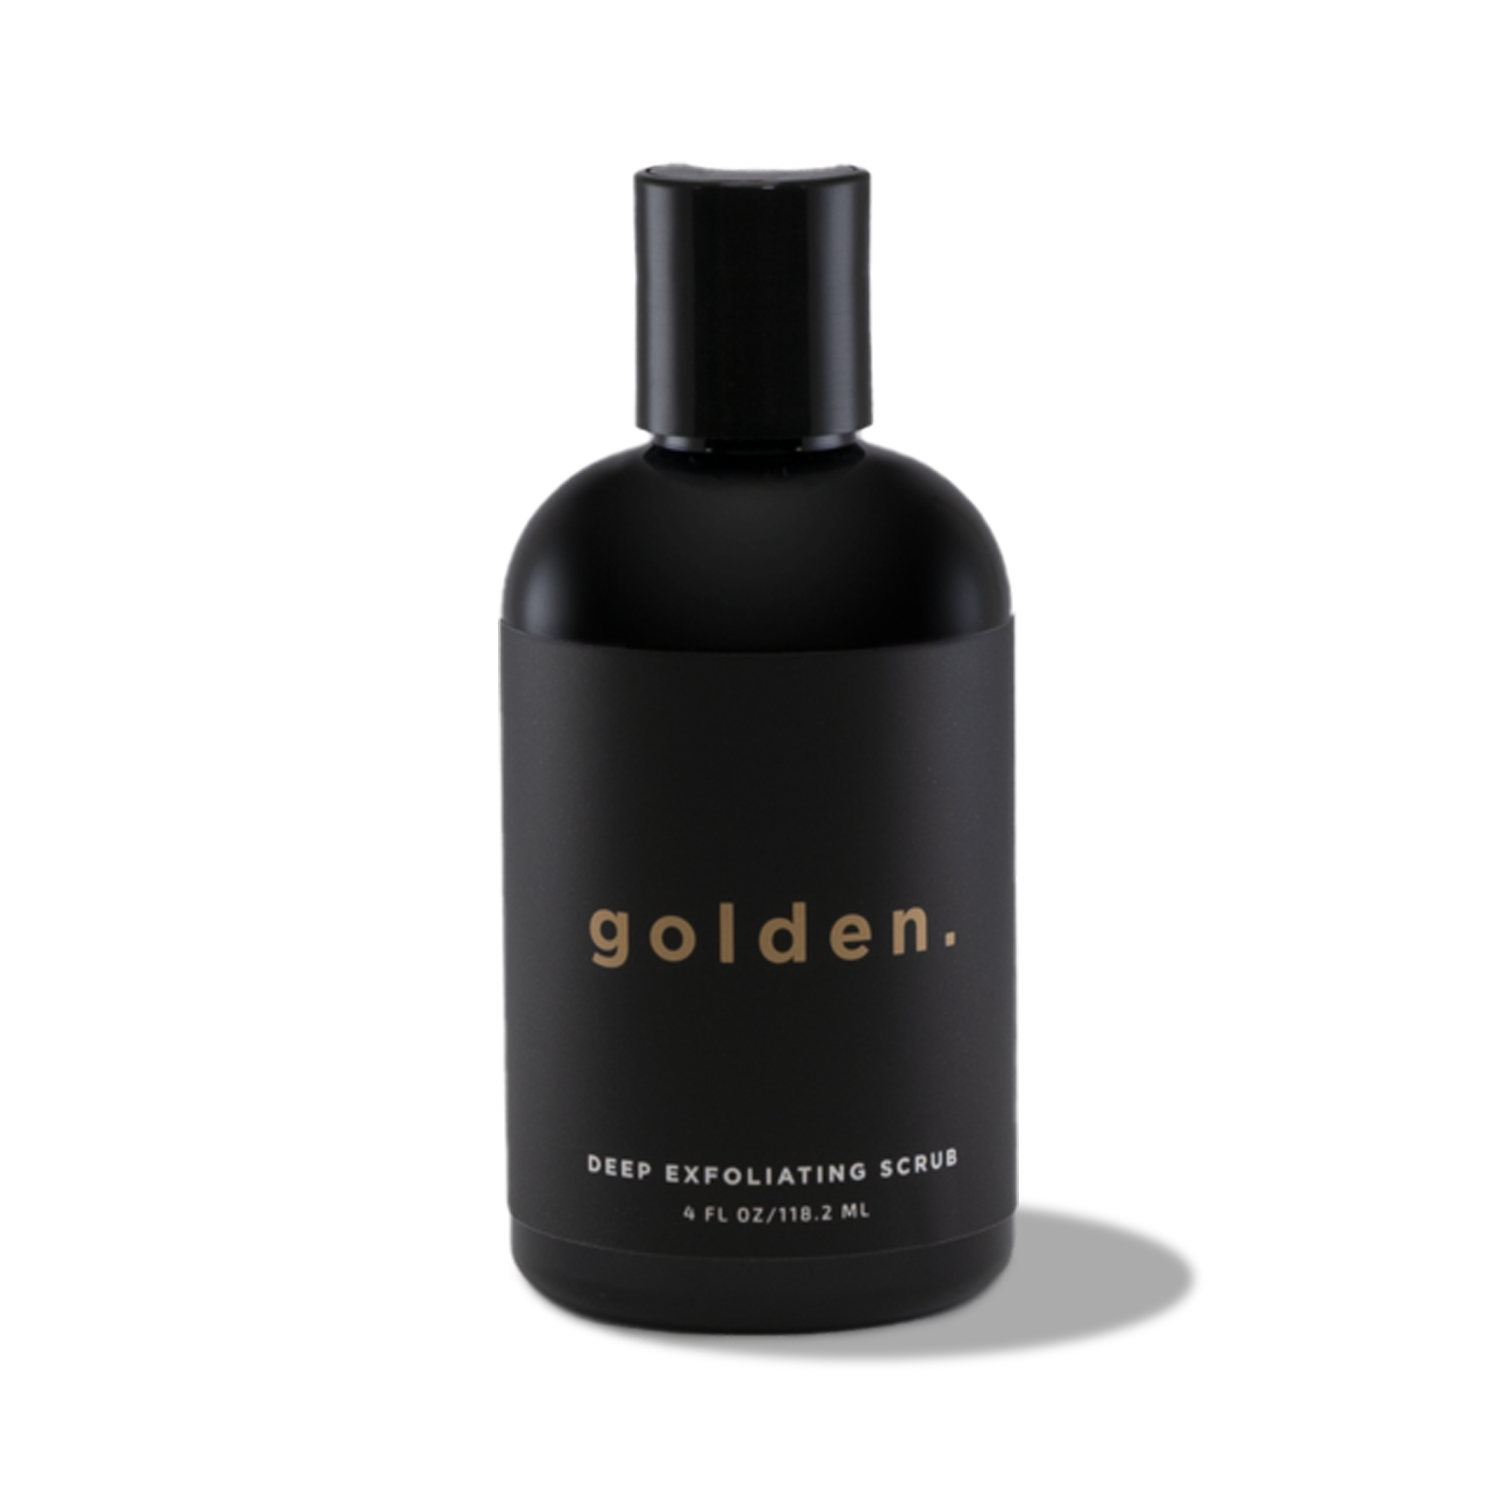 Golden Grooming Co. - Deep Exfoliating Scrub